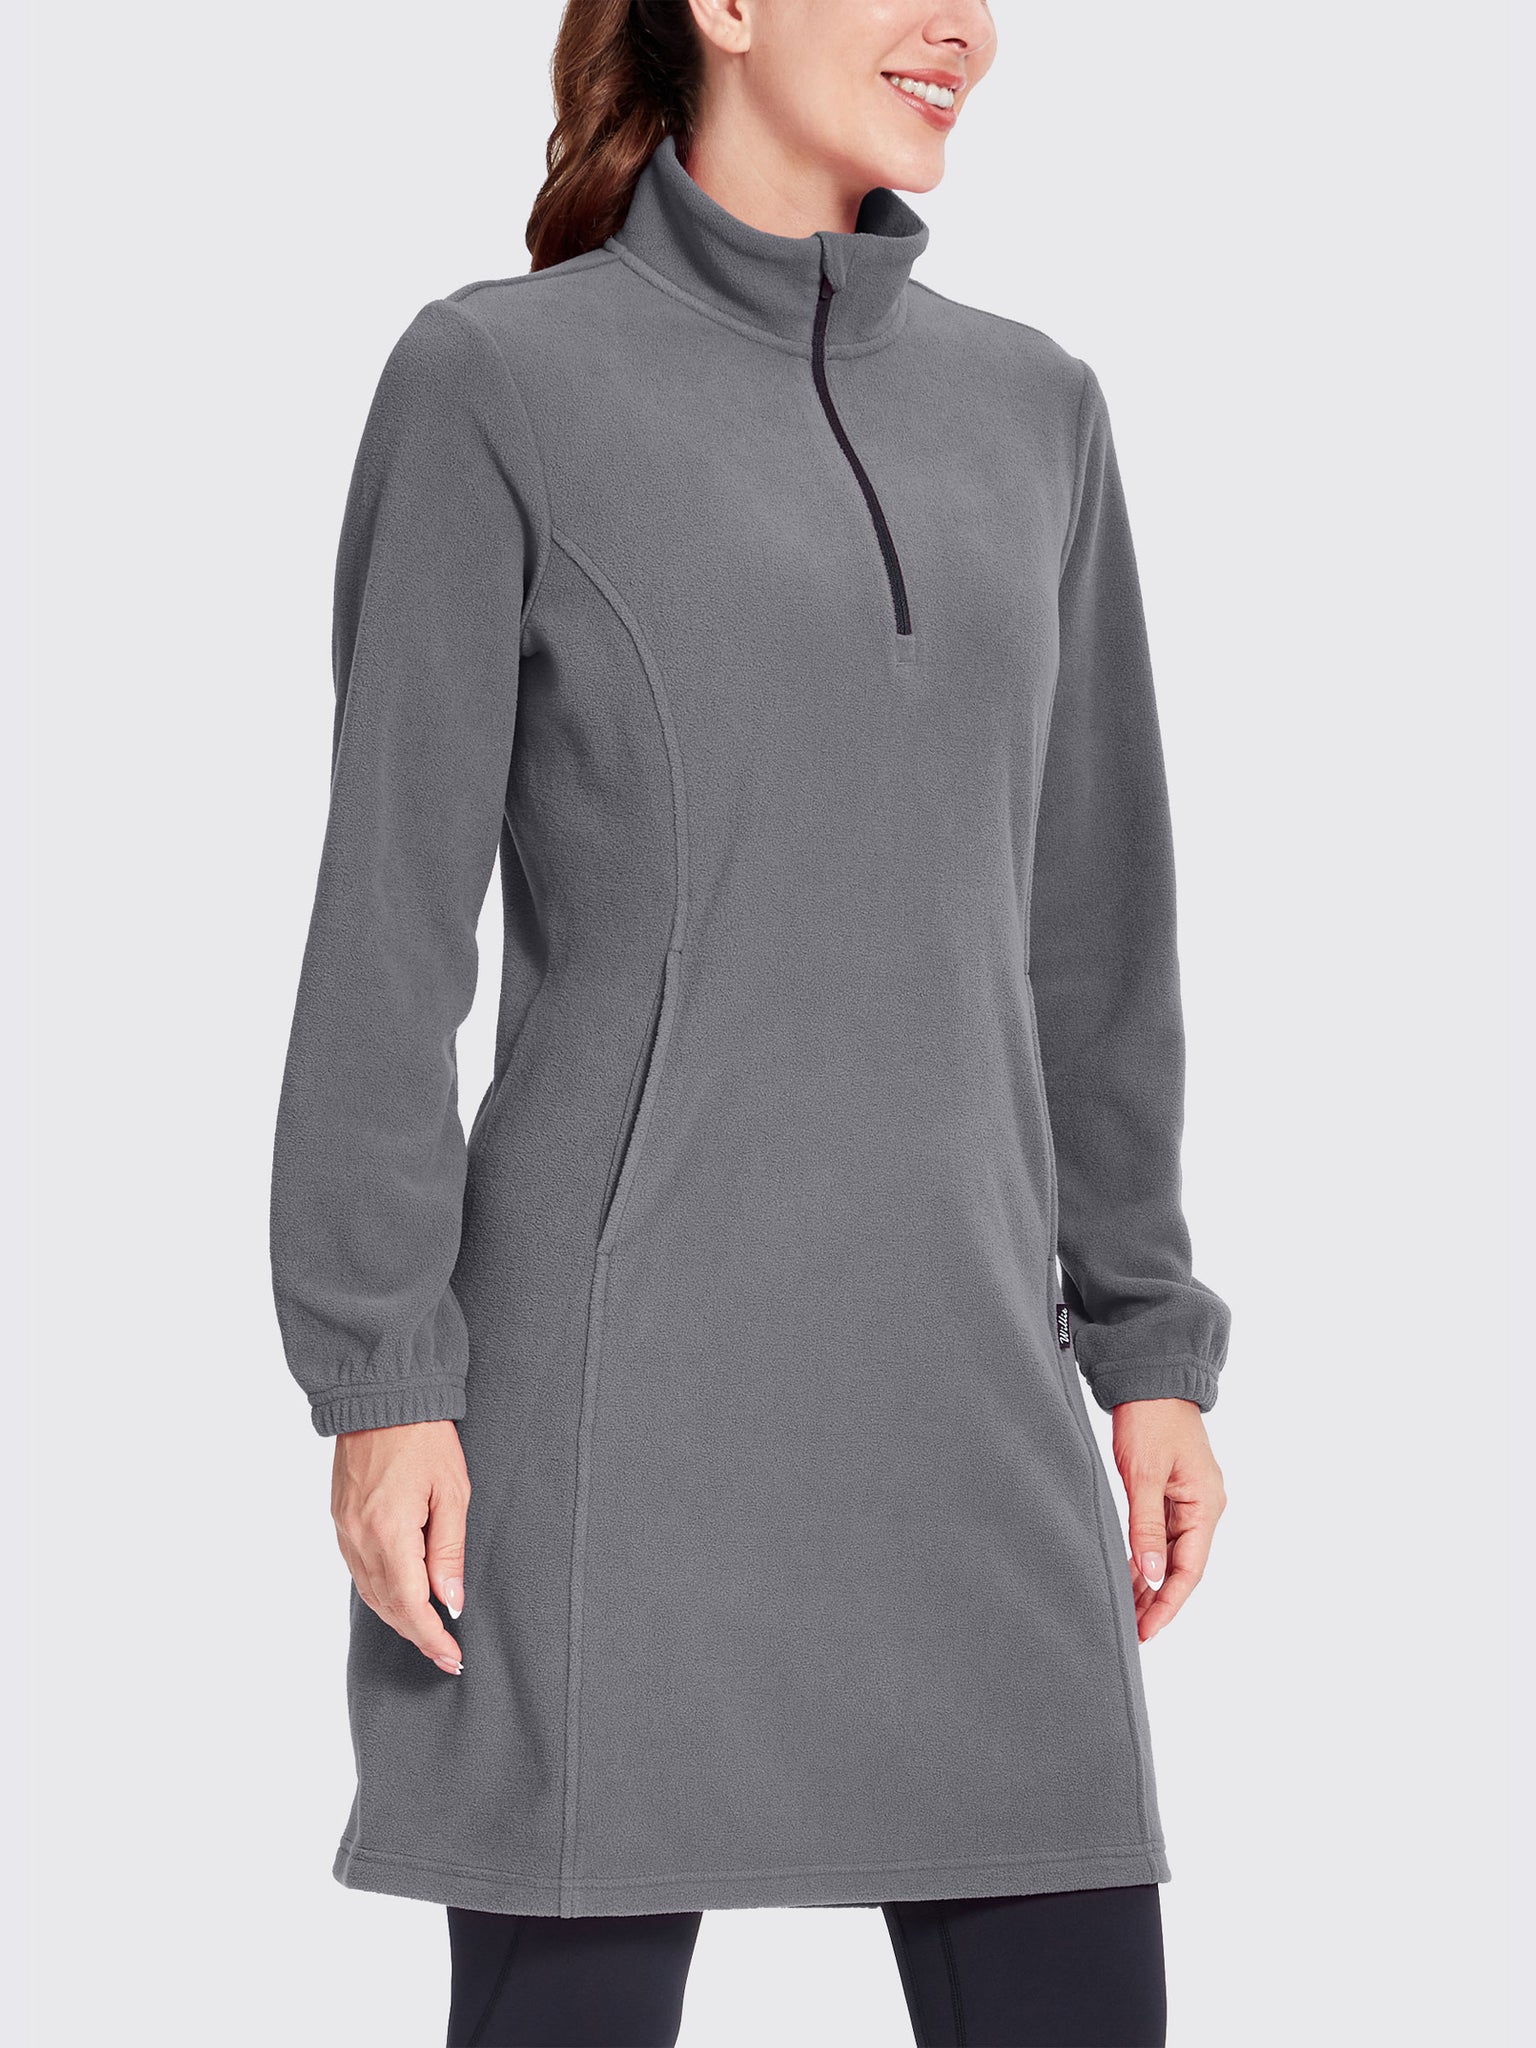 Women's Fleece Long-Sleeve Turtleneck Dress DeepGray1